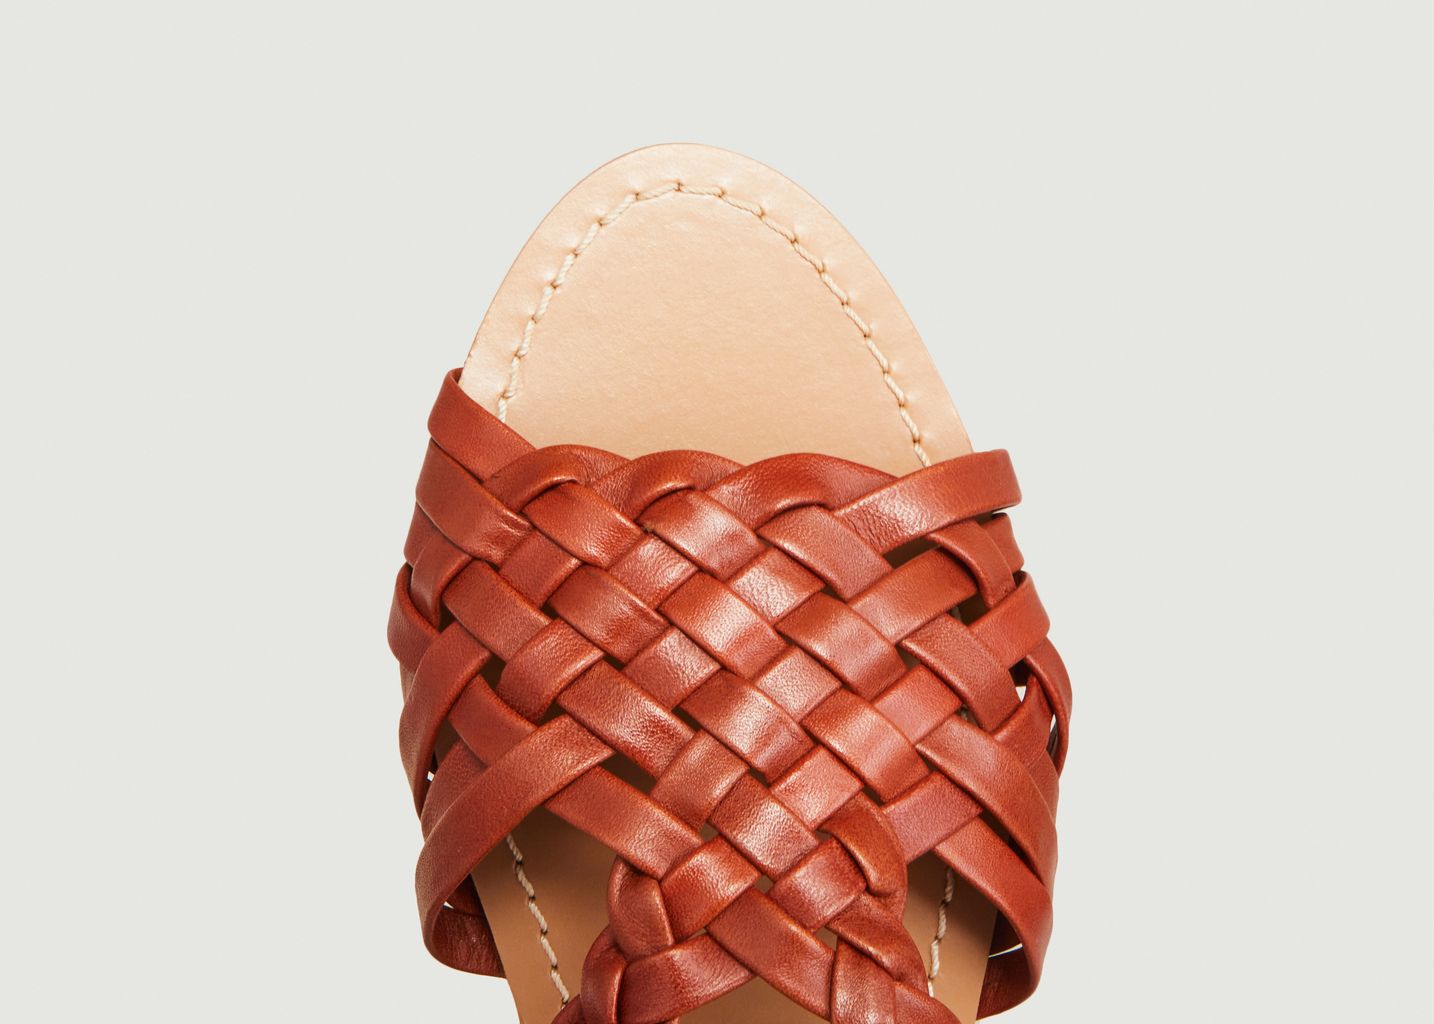 Mendy leather sandals - Petite Mendigote